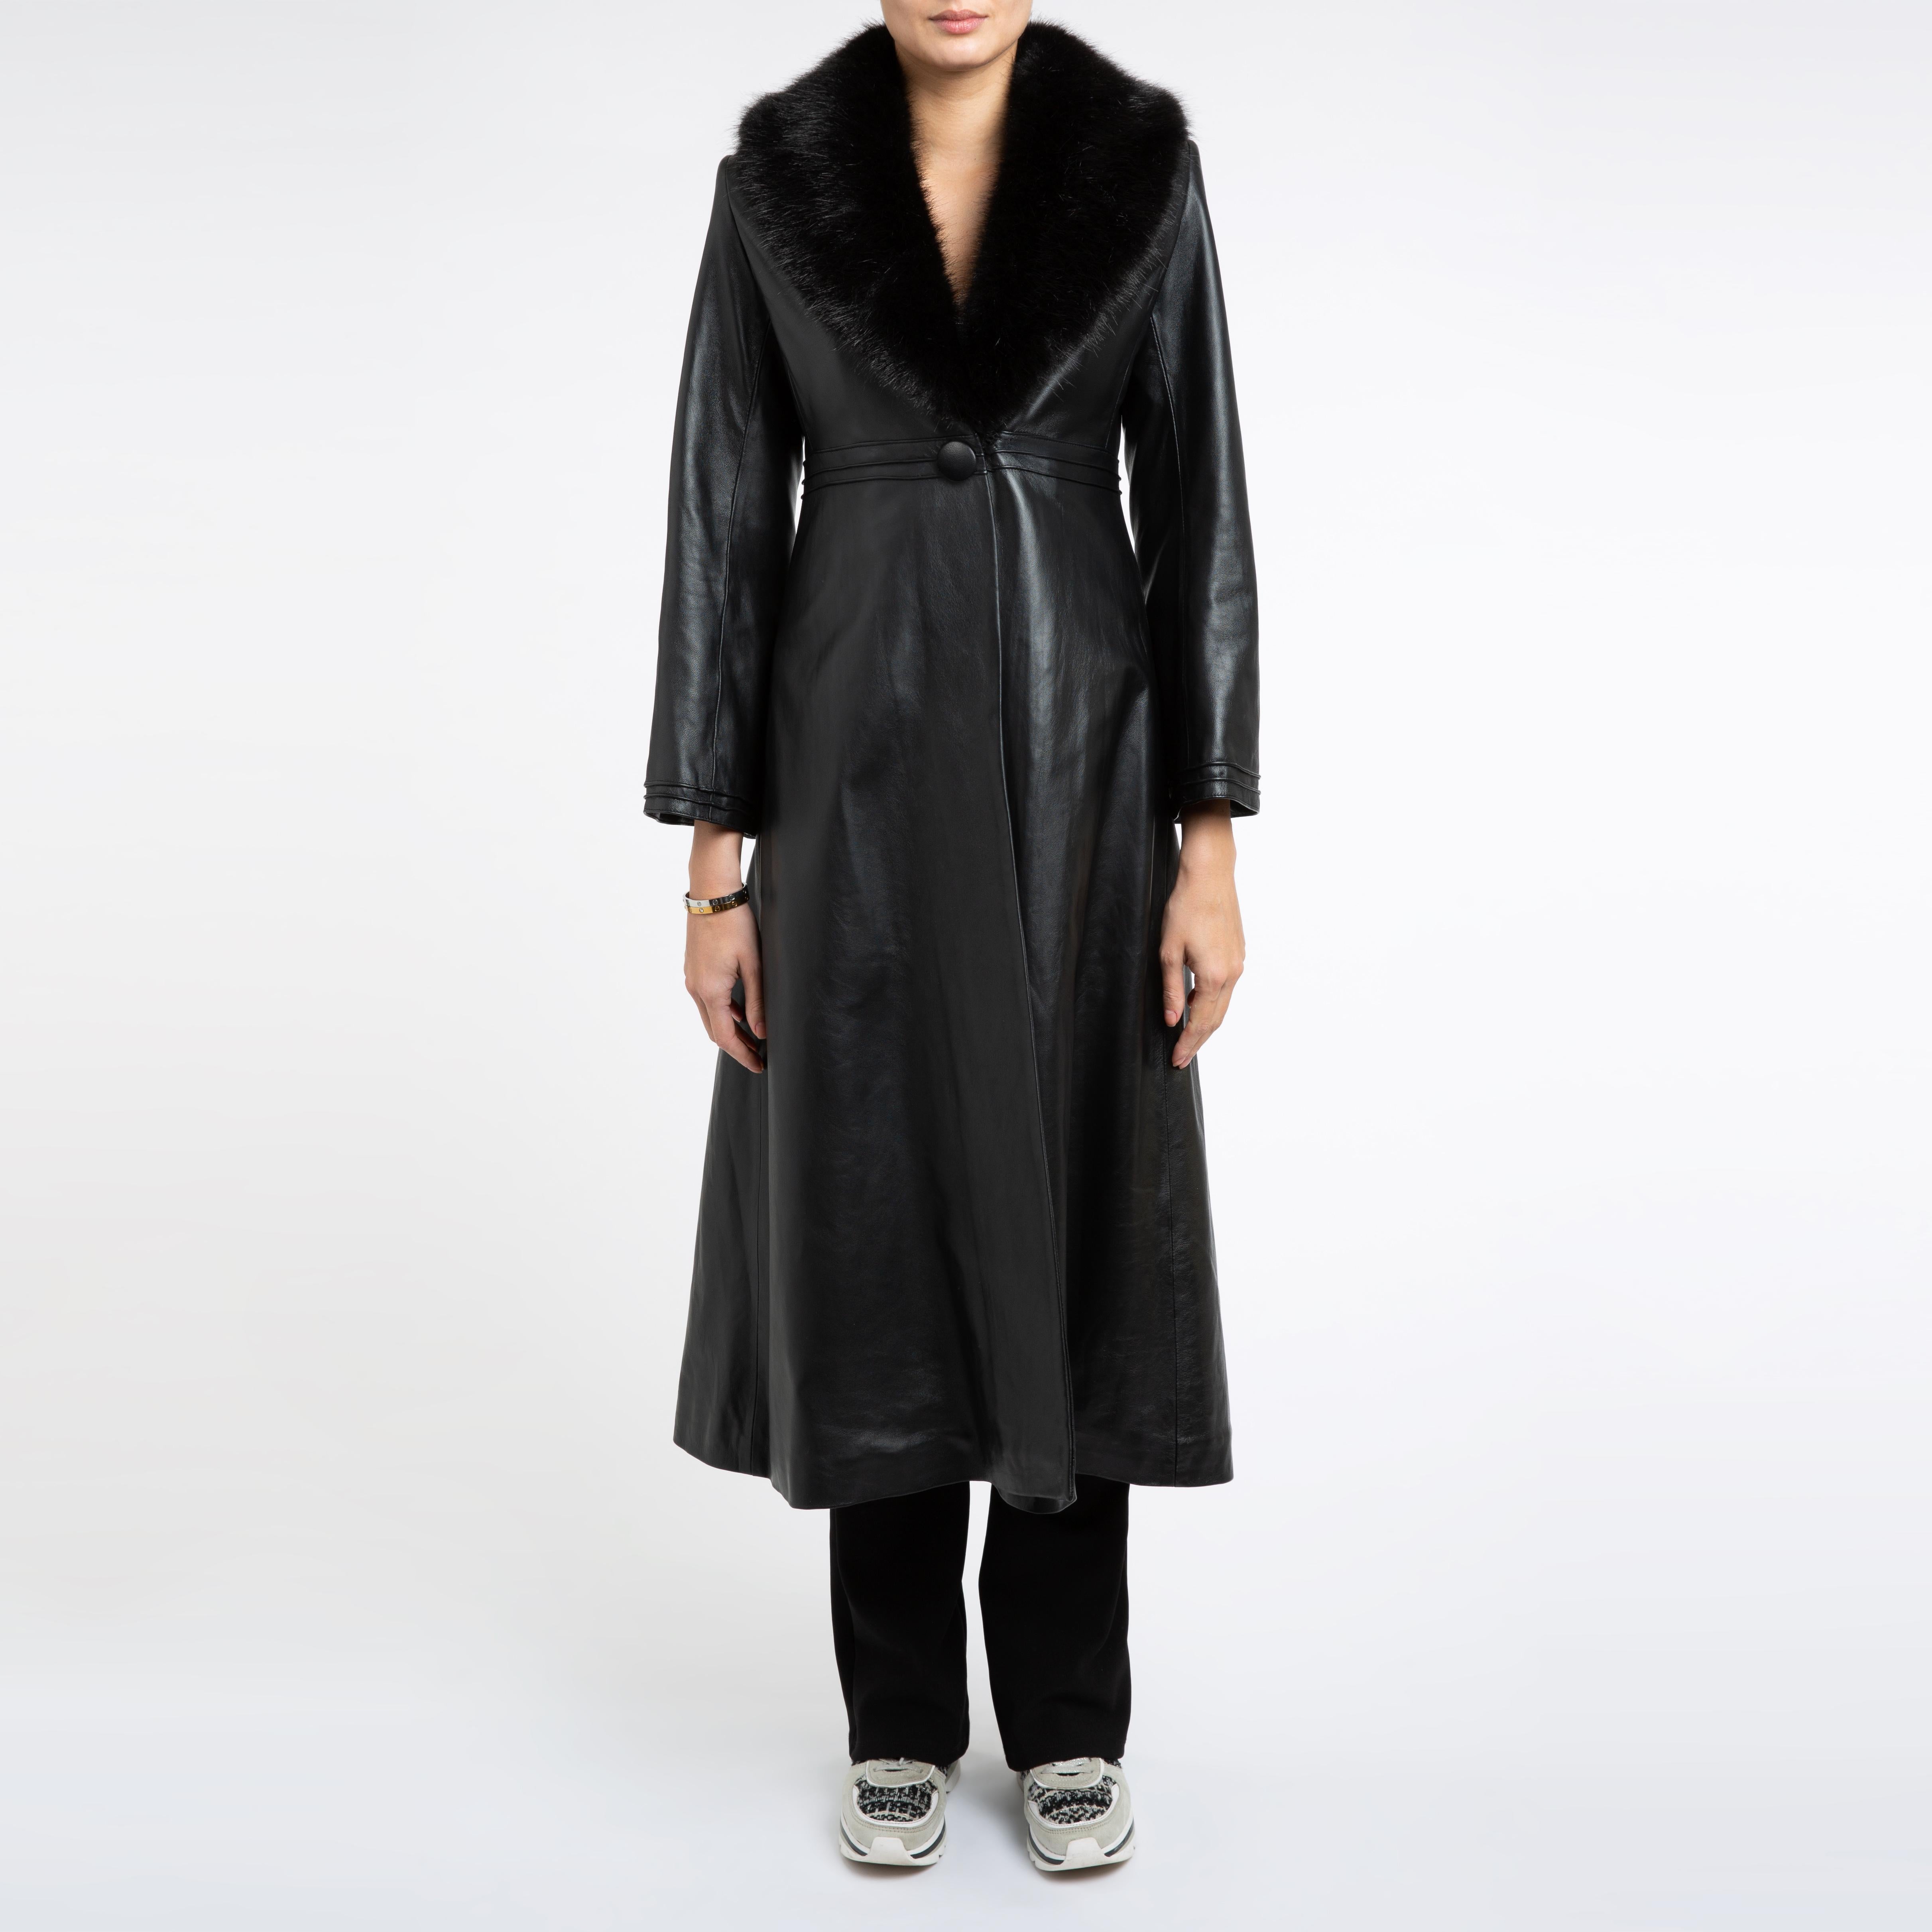 Verheyen London Edward Leather Coat with Faux Fur Collar in Black - Size uk 10 For Sale 13